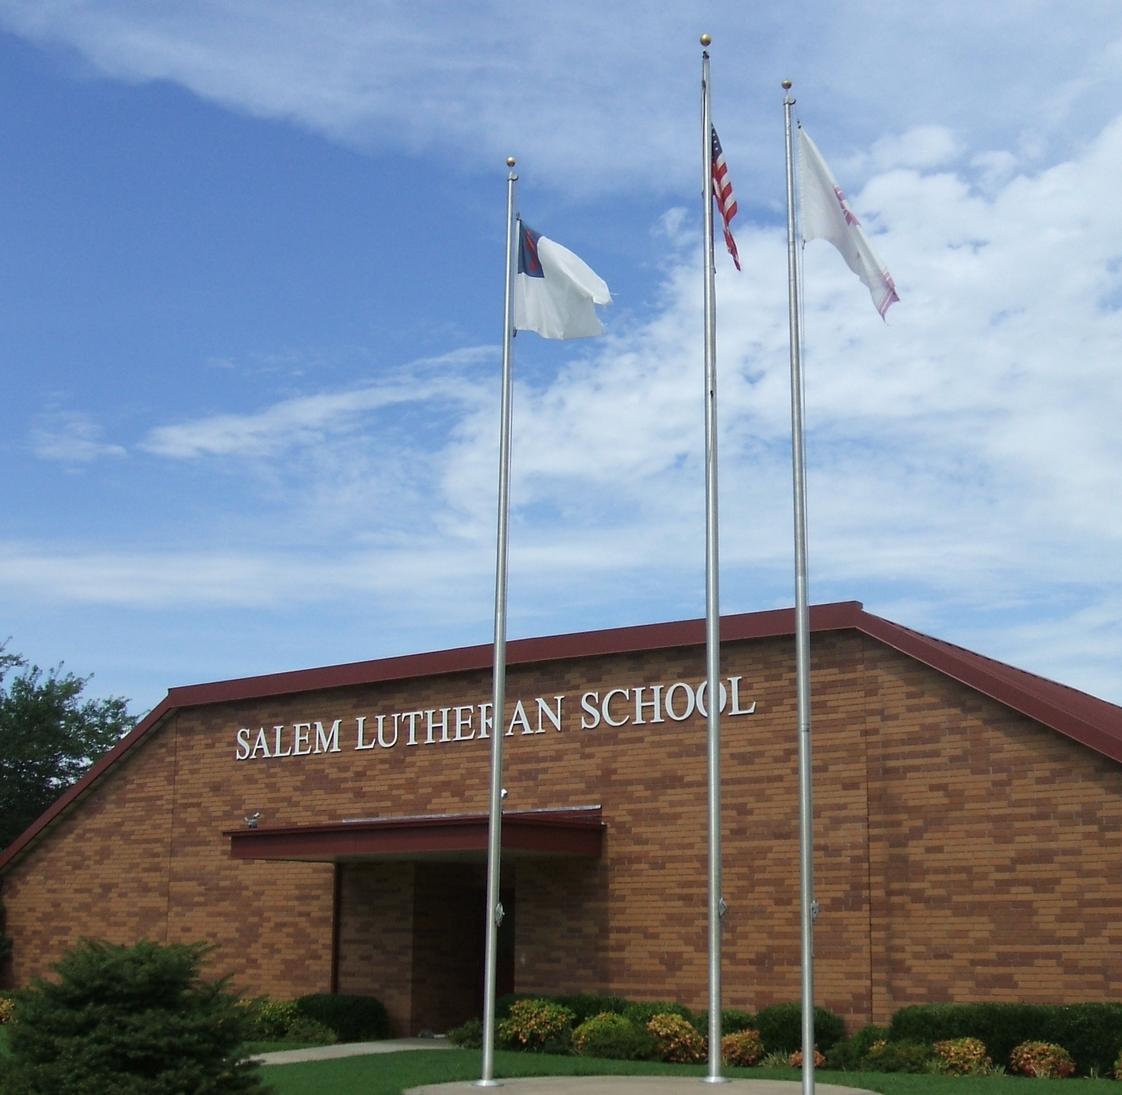 Salem Lutheran Pre-School Photo #1 - Salem Lutheran School